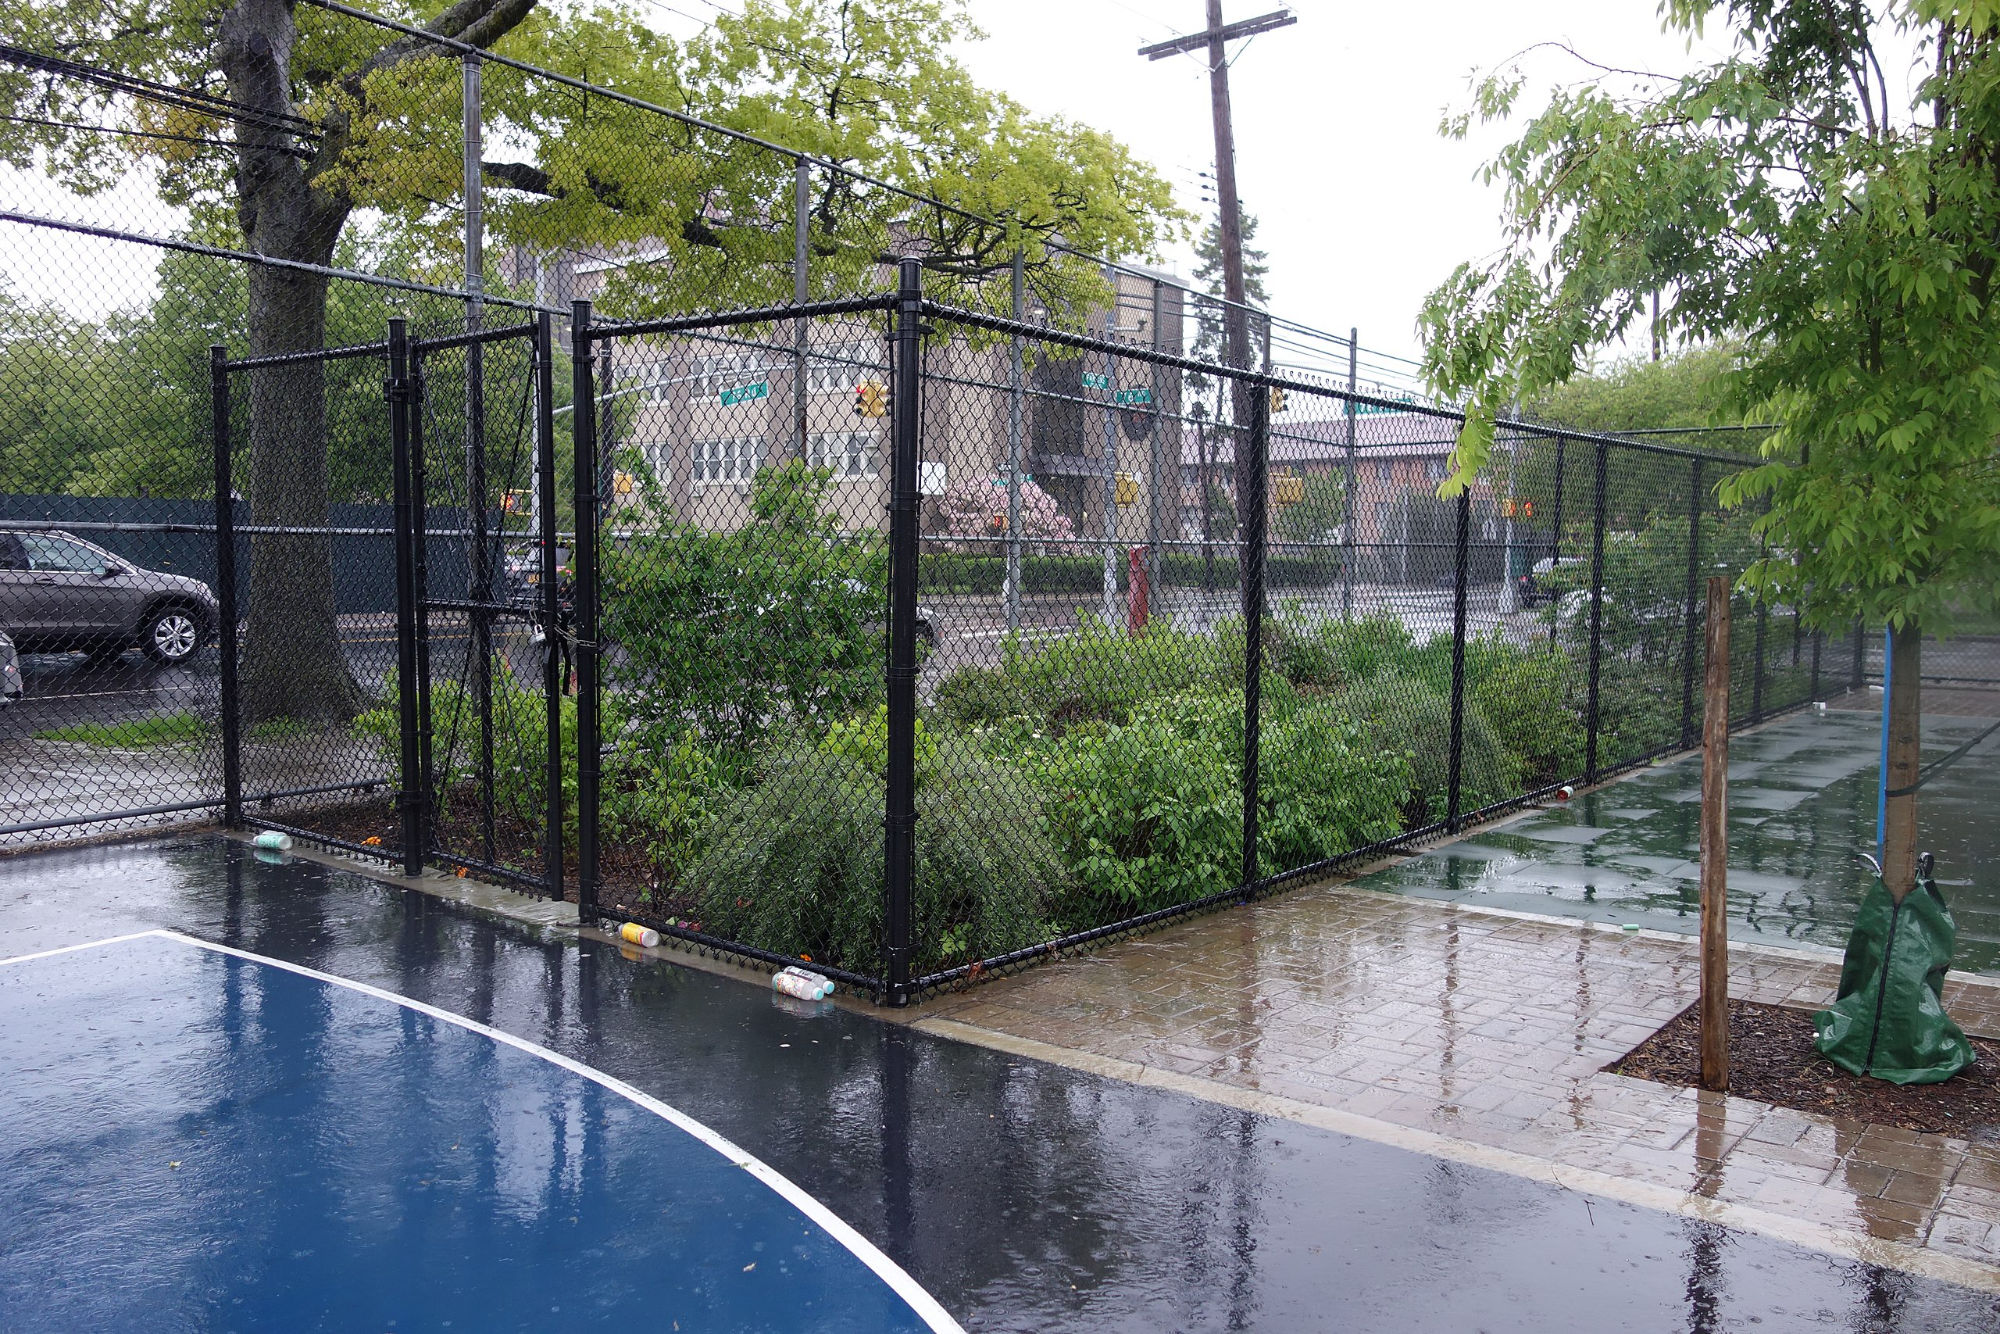 Rain garden next to a playground, soaking up rainwater